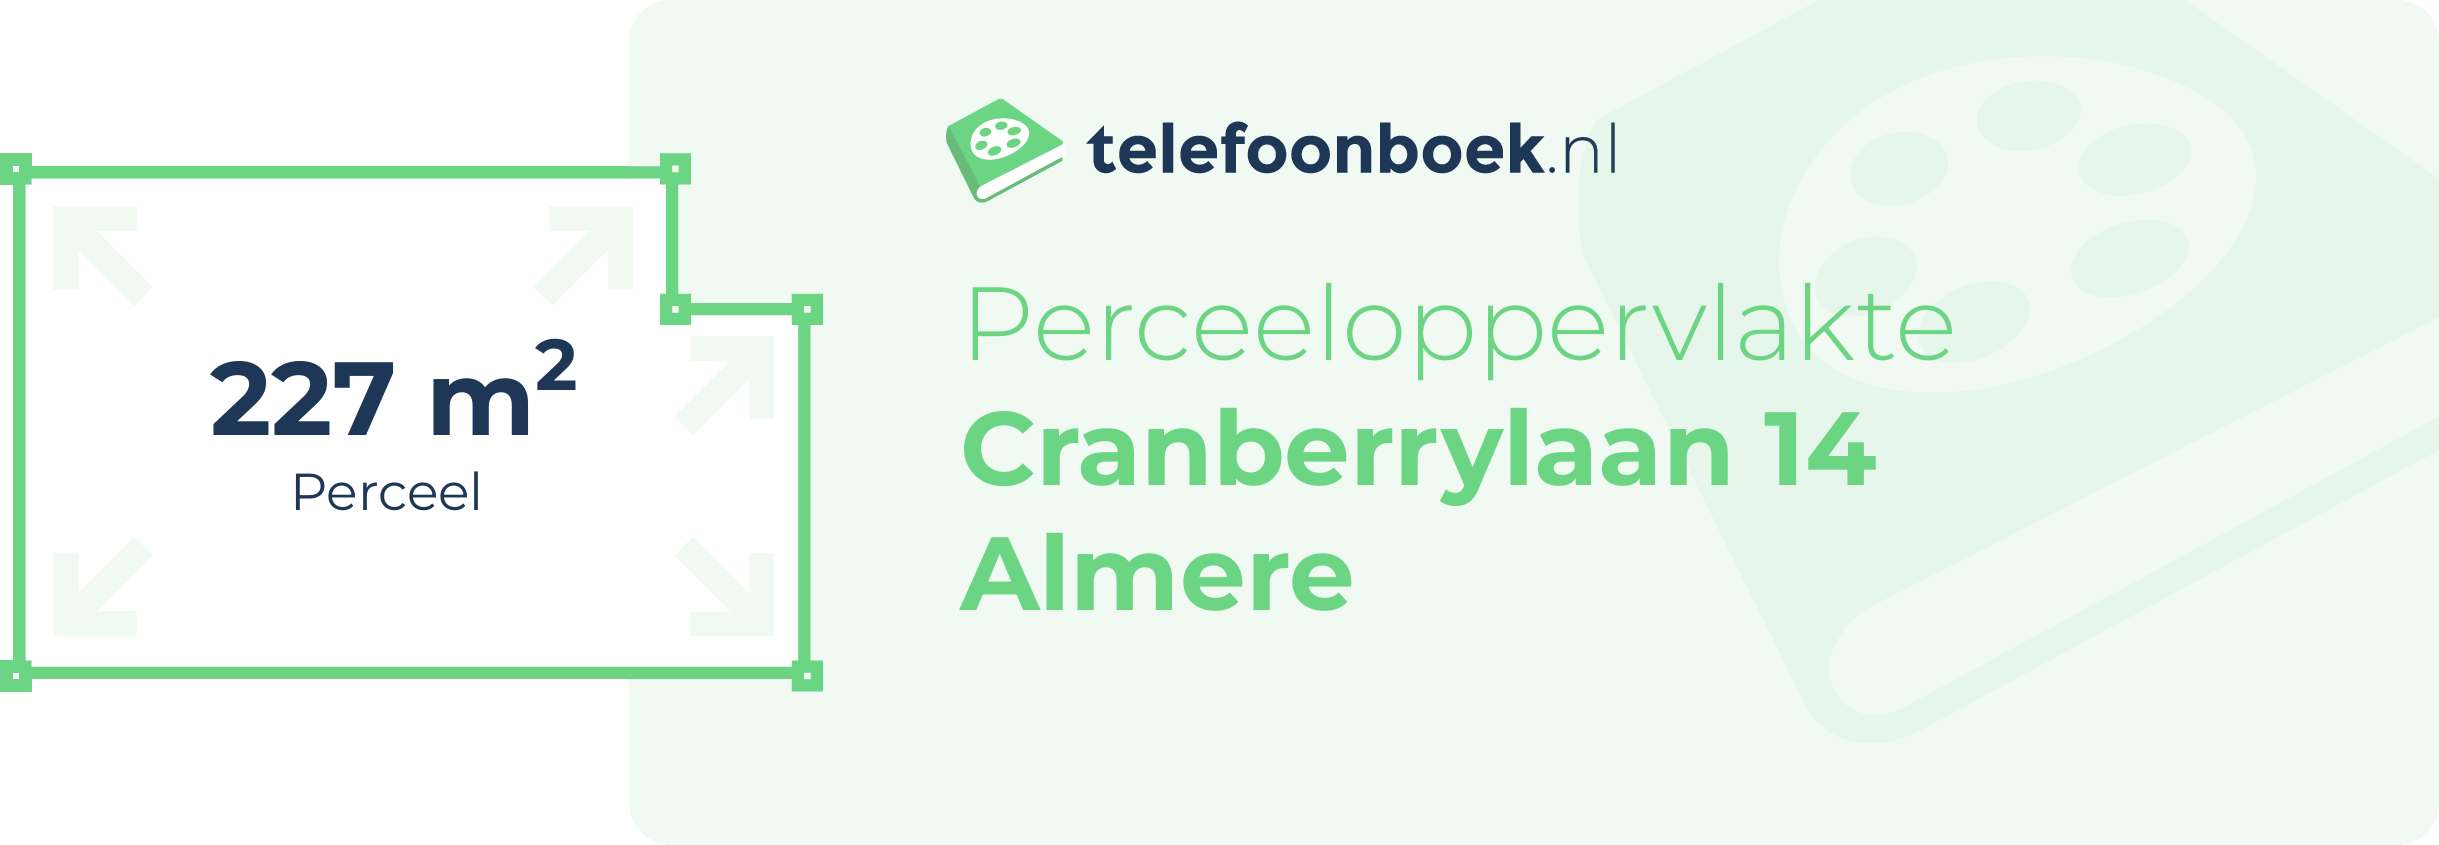 Perceeloppervlakte Cranberrylaan 14 Almere